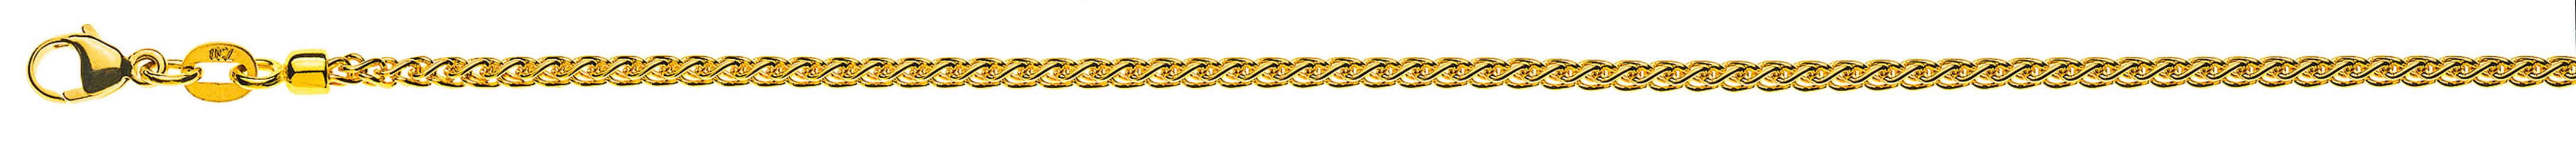 AURONOS Prestige Necklace yellow gold 18K cable chain 50cm 2.15mm